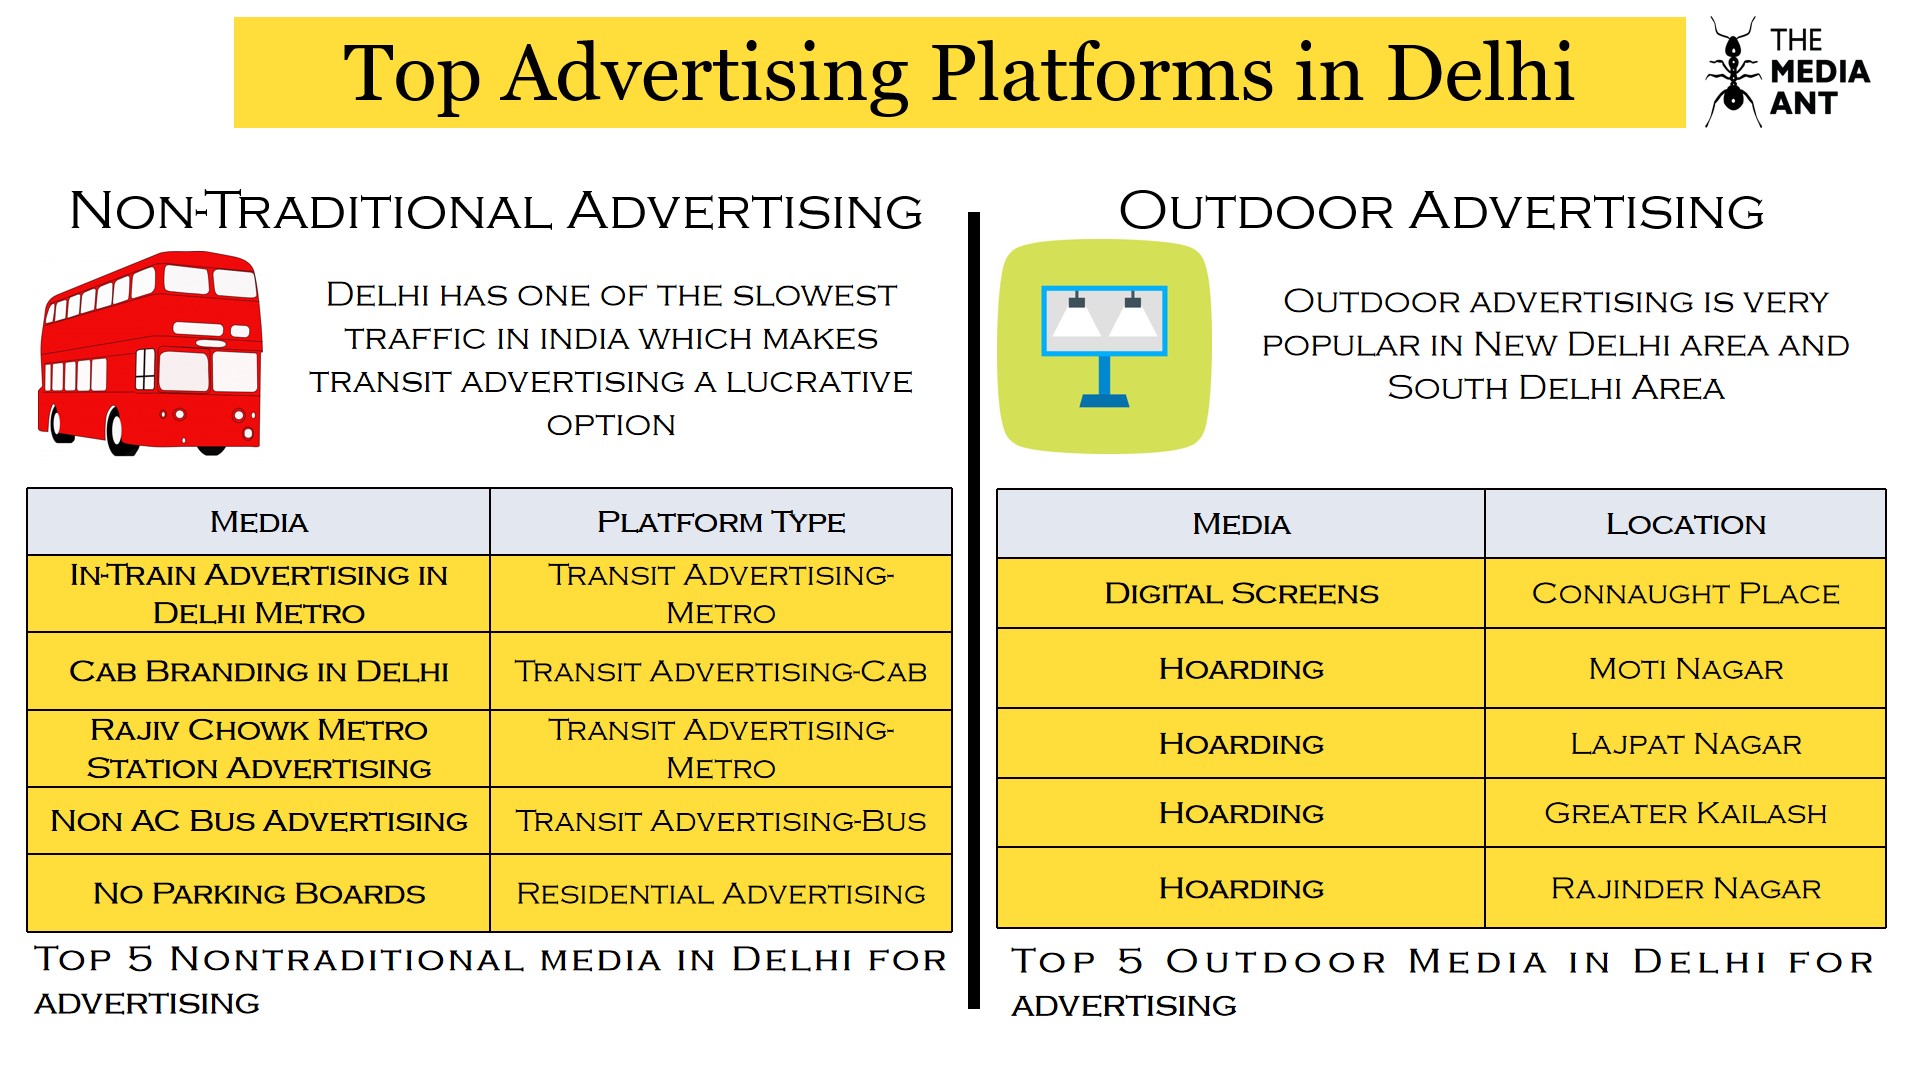 Top nontraditional and outdoor advertising platforms in Delhi